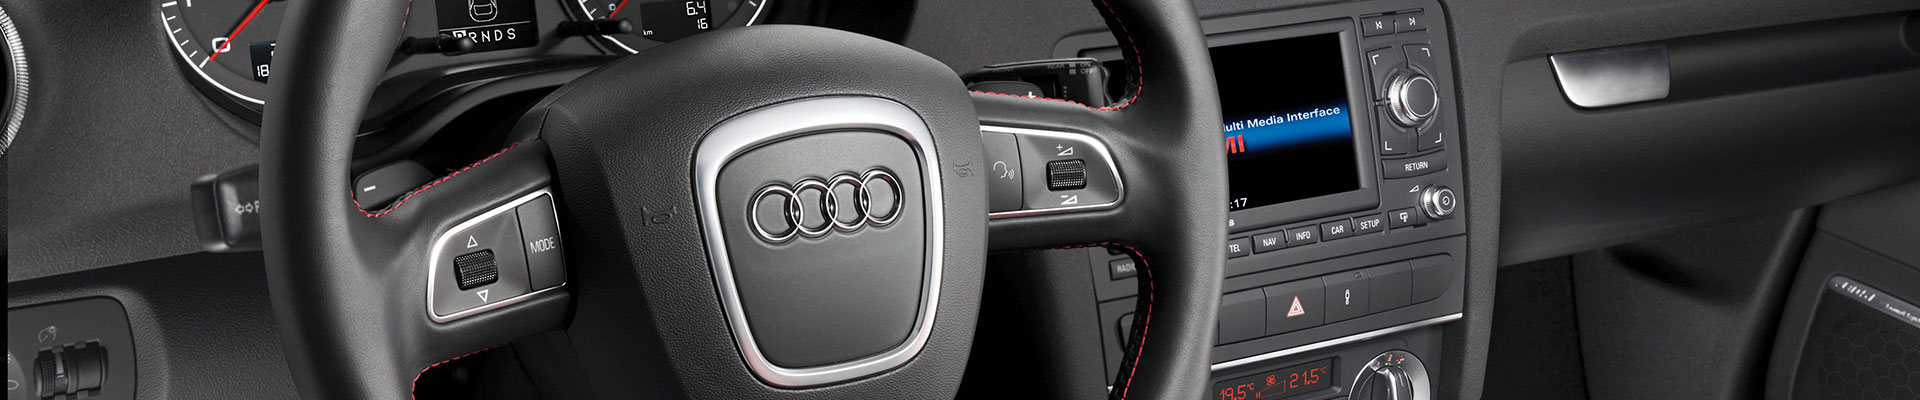 Audi a3 autoverzekering